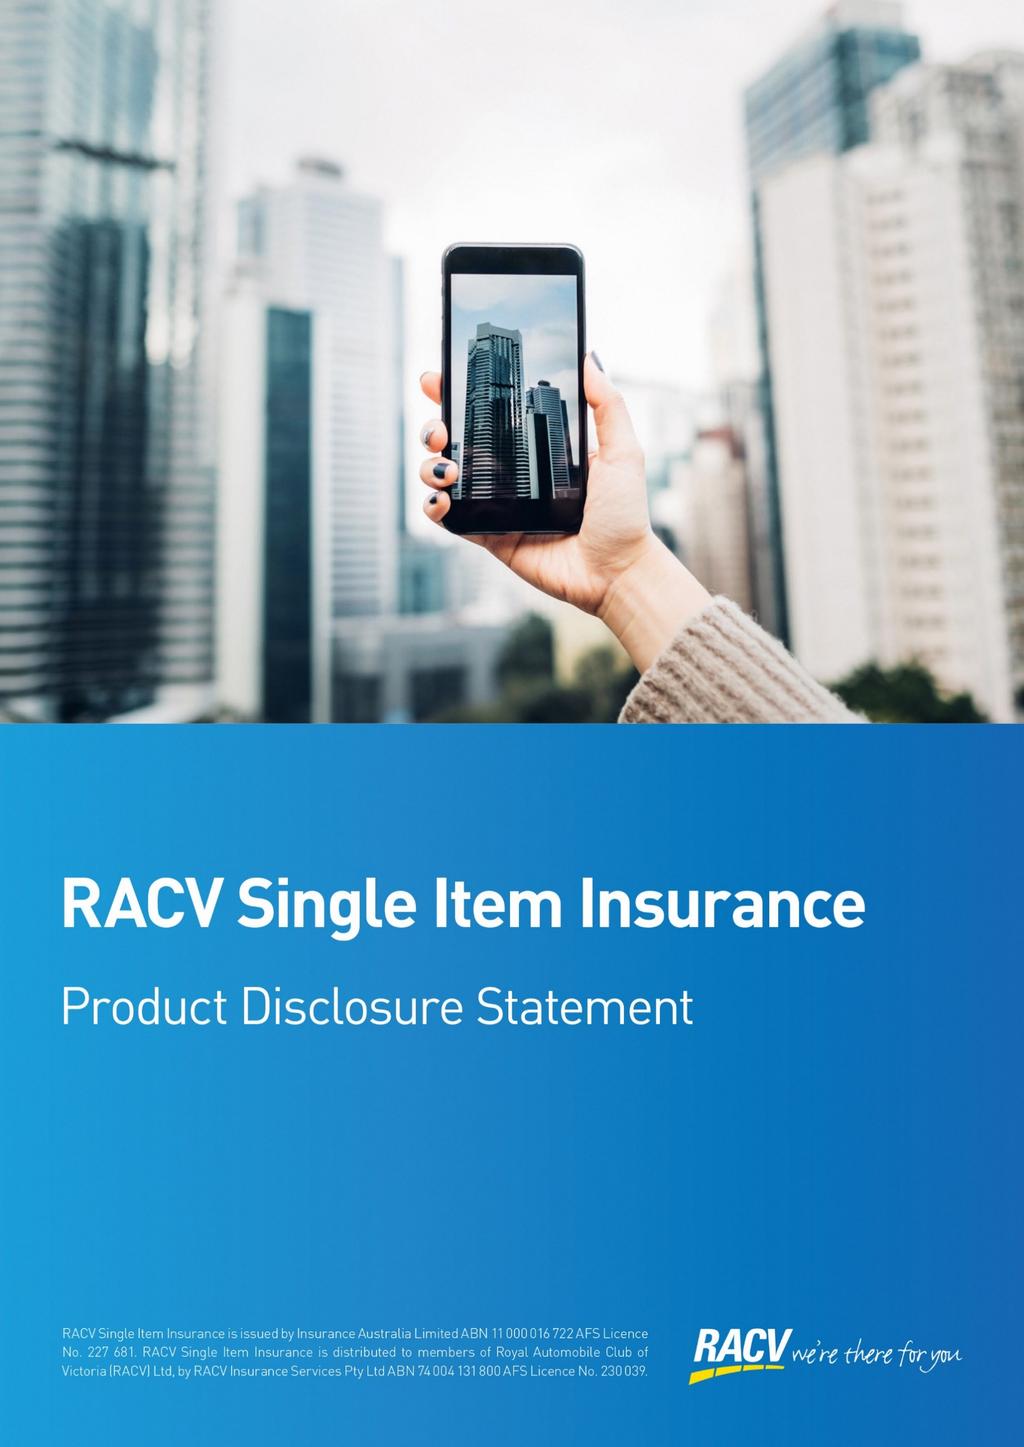 BENDIGO BANK RACV Single Item Insurance is issued by